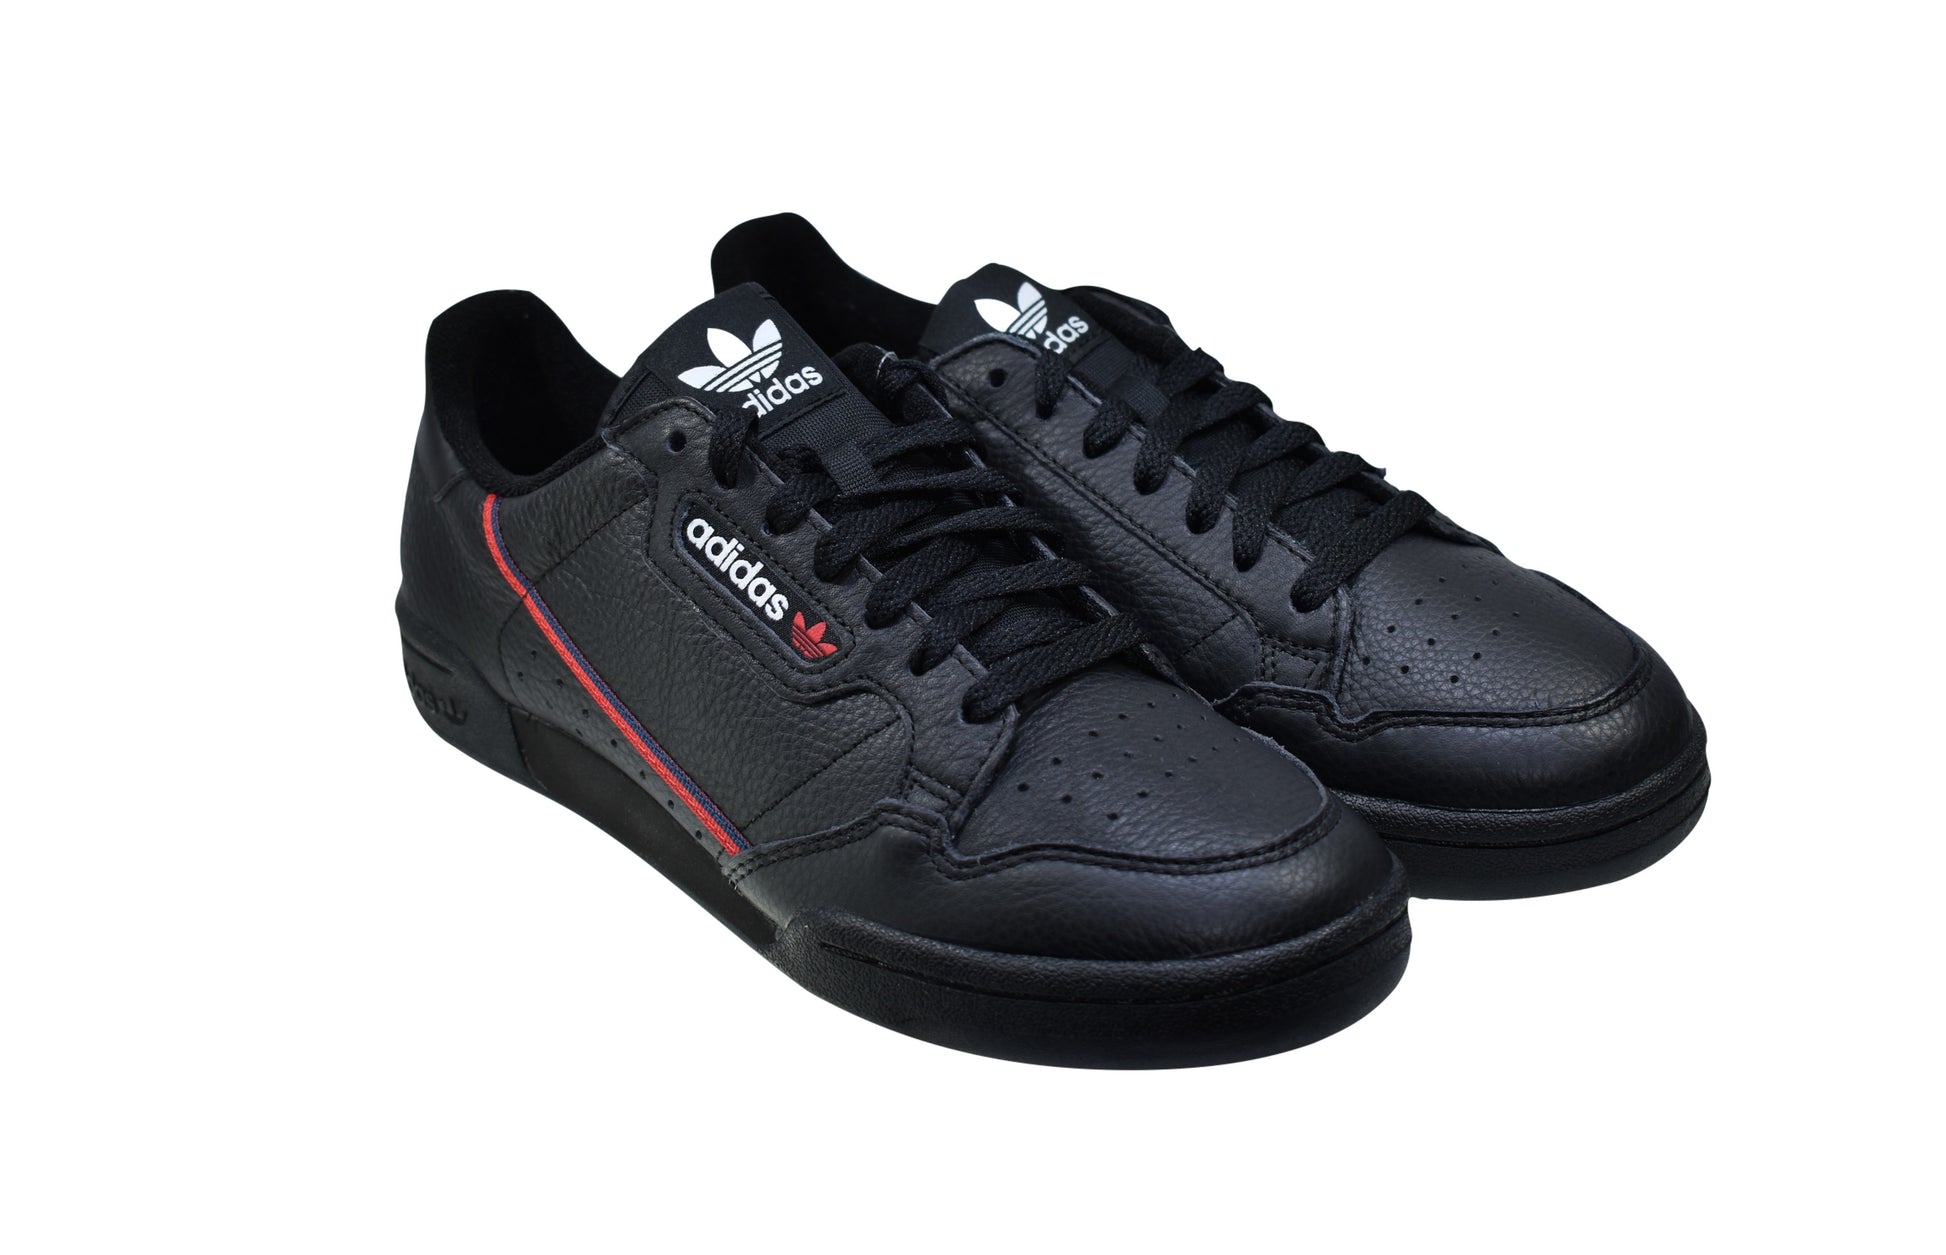 Adidas continental 80 total black - Adidas